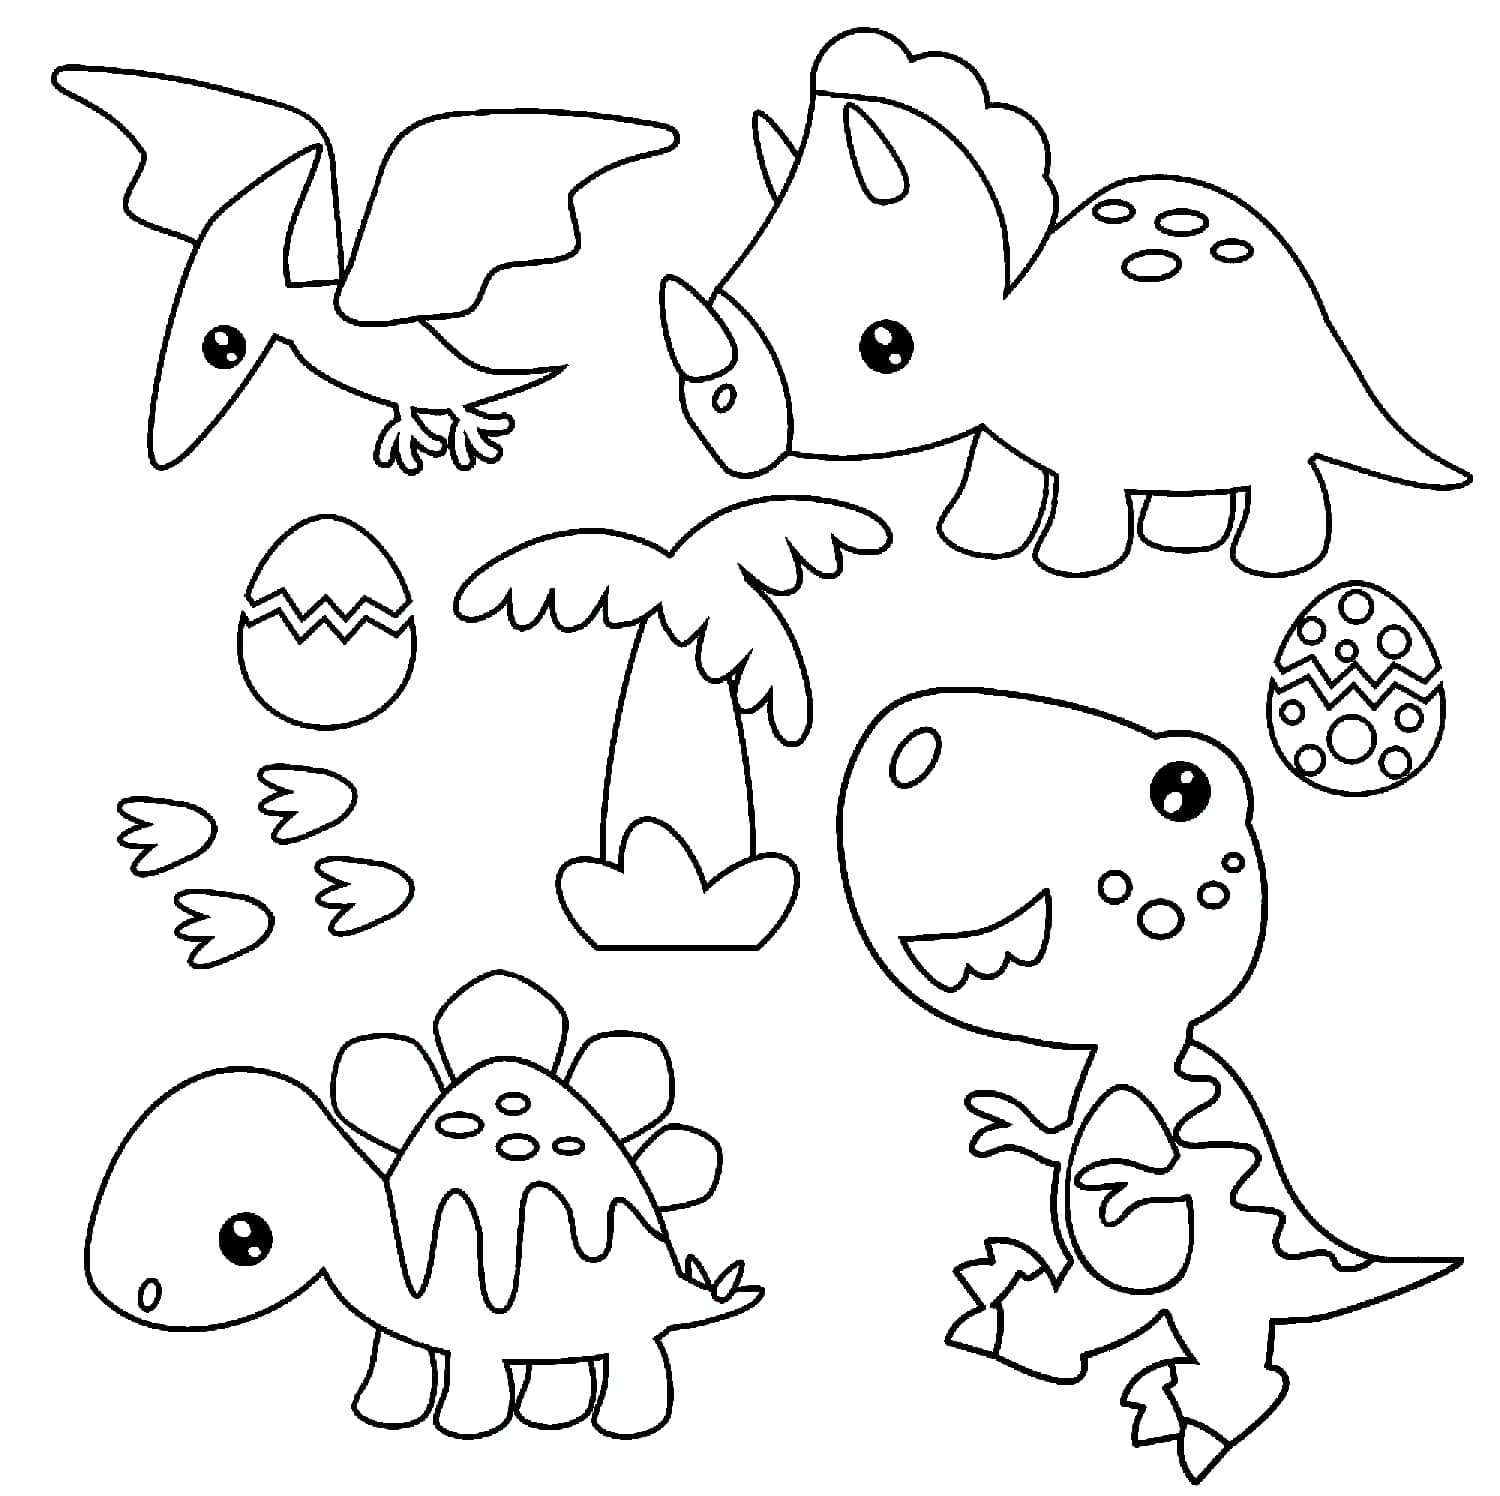 Dinosaur coloring pages - ColoringLib